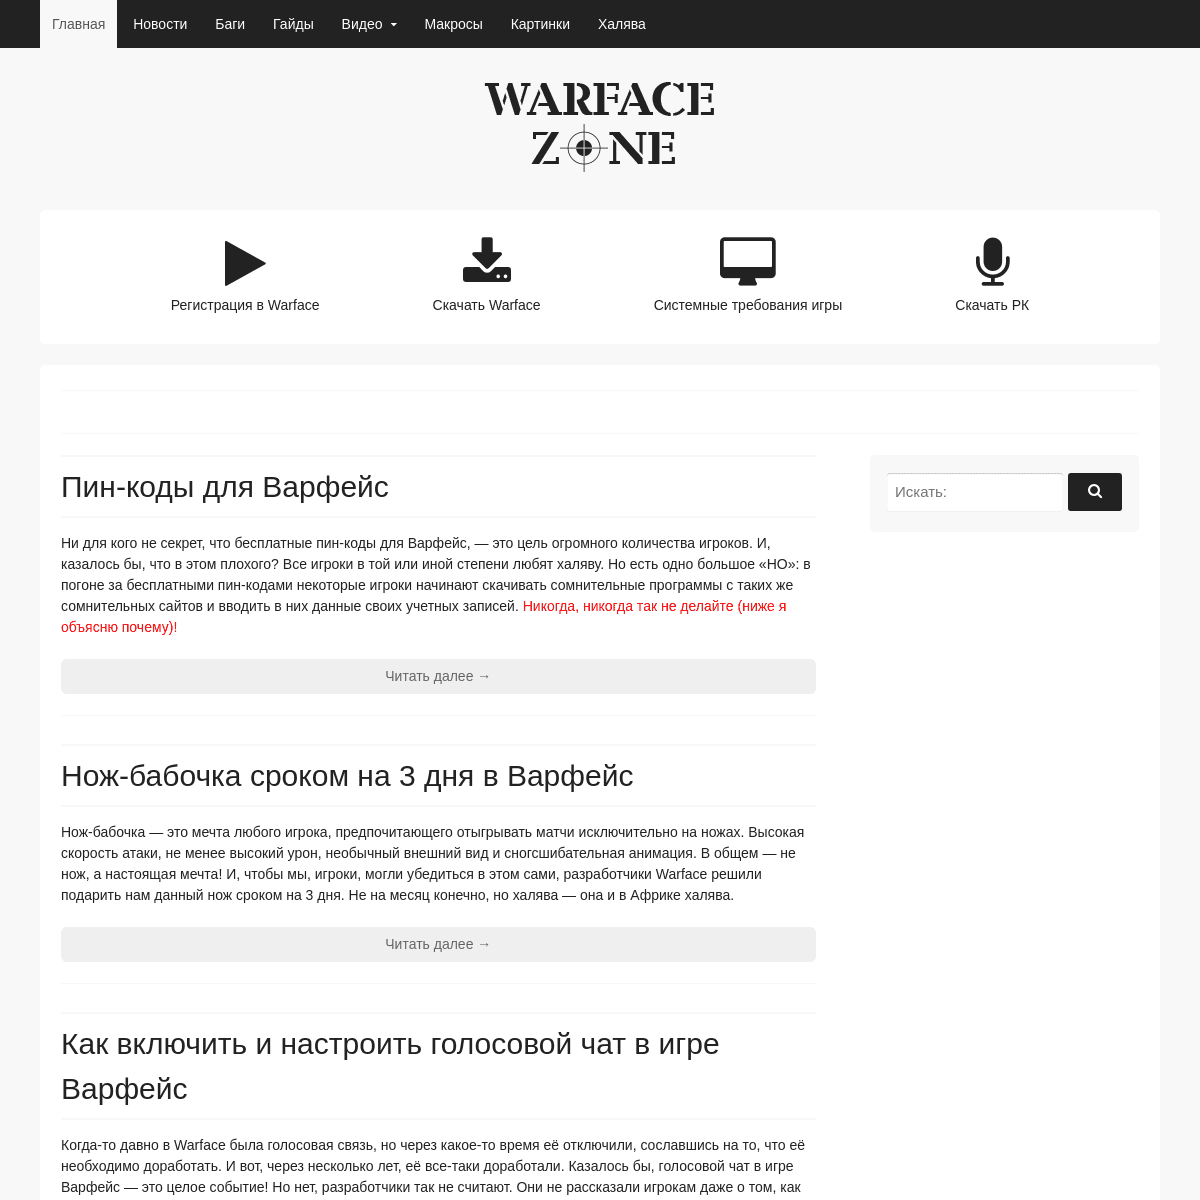 A complete backup of warface-zone.ru